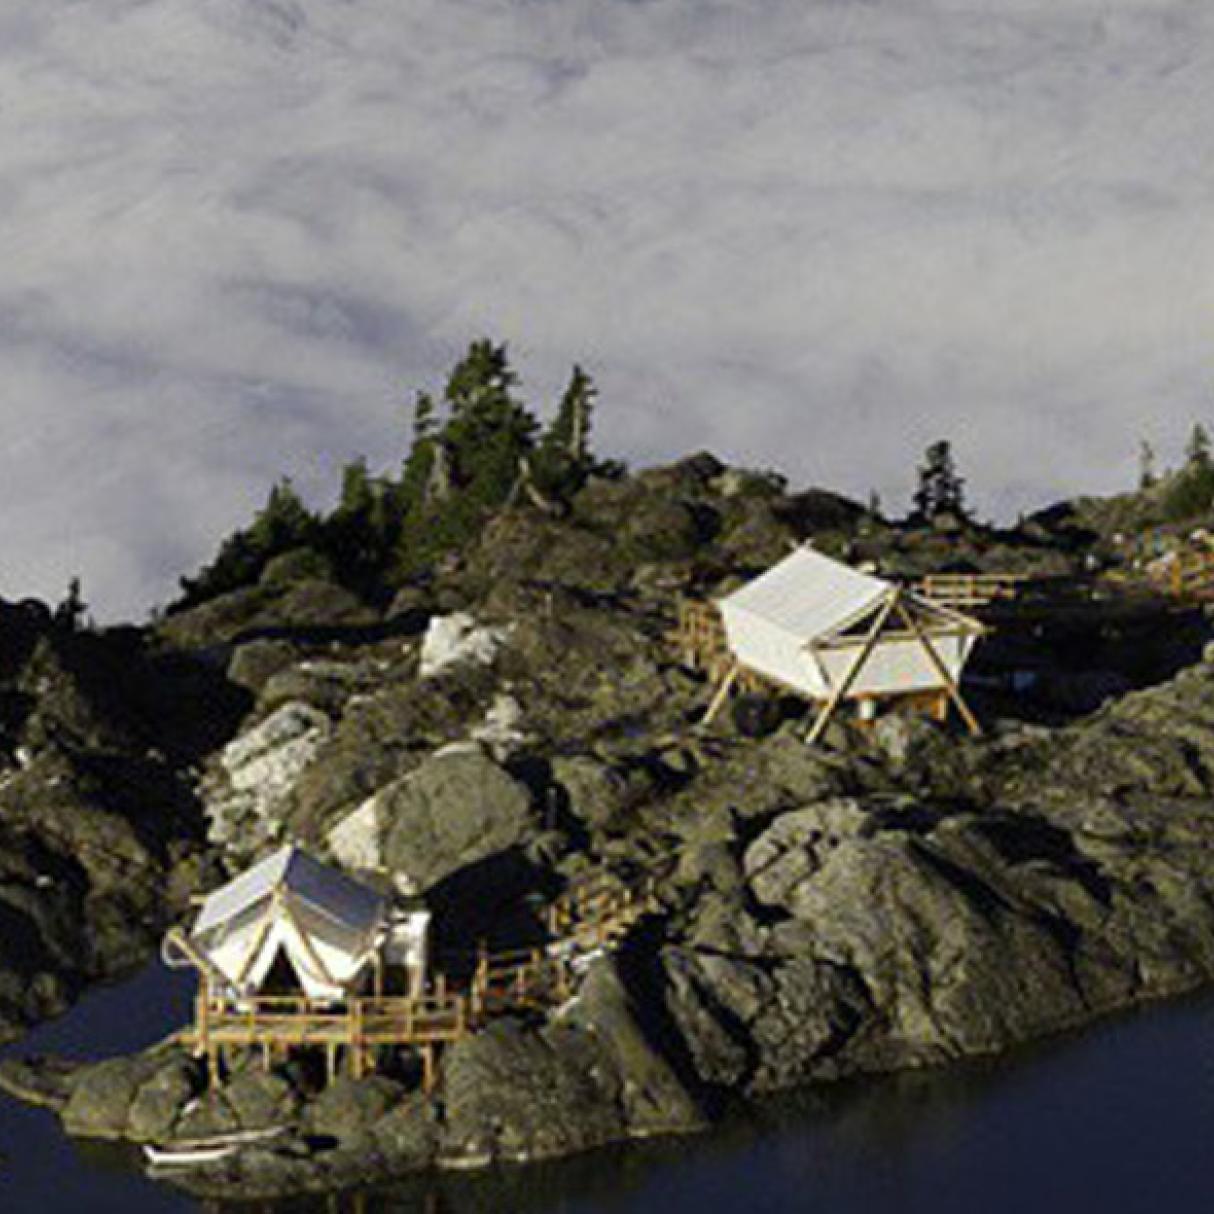 Cloud Camp at Clayoquot Wilderness Resort